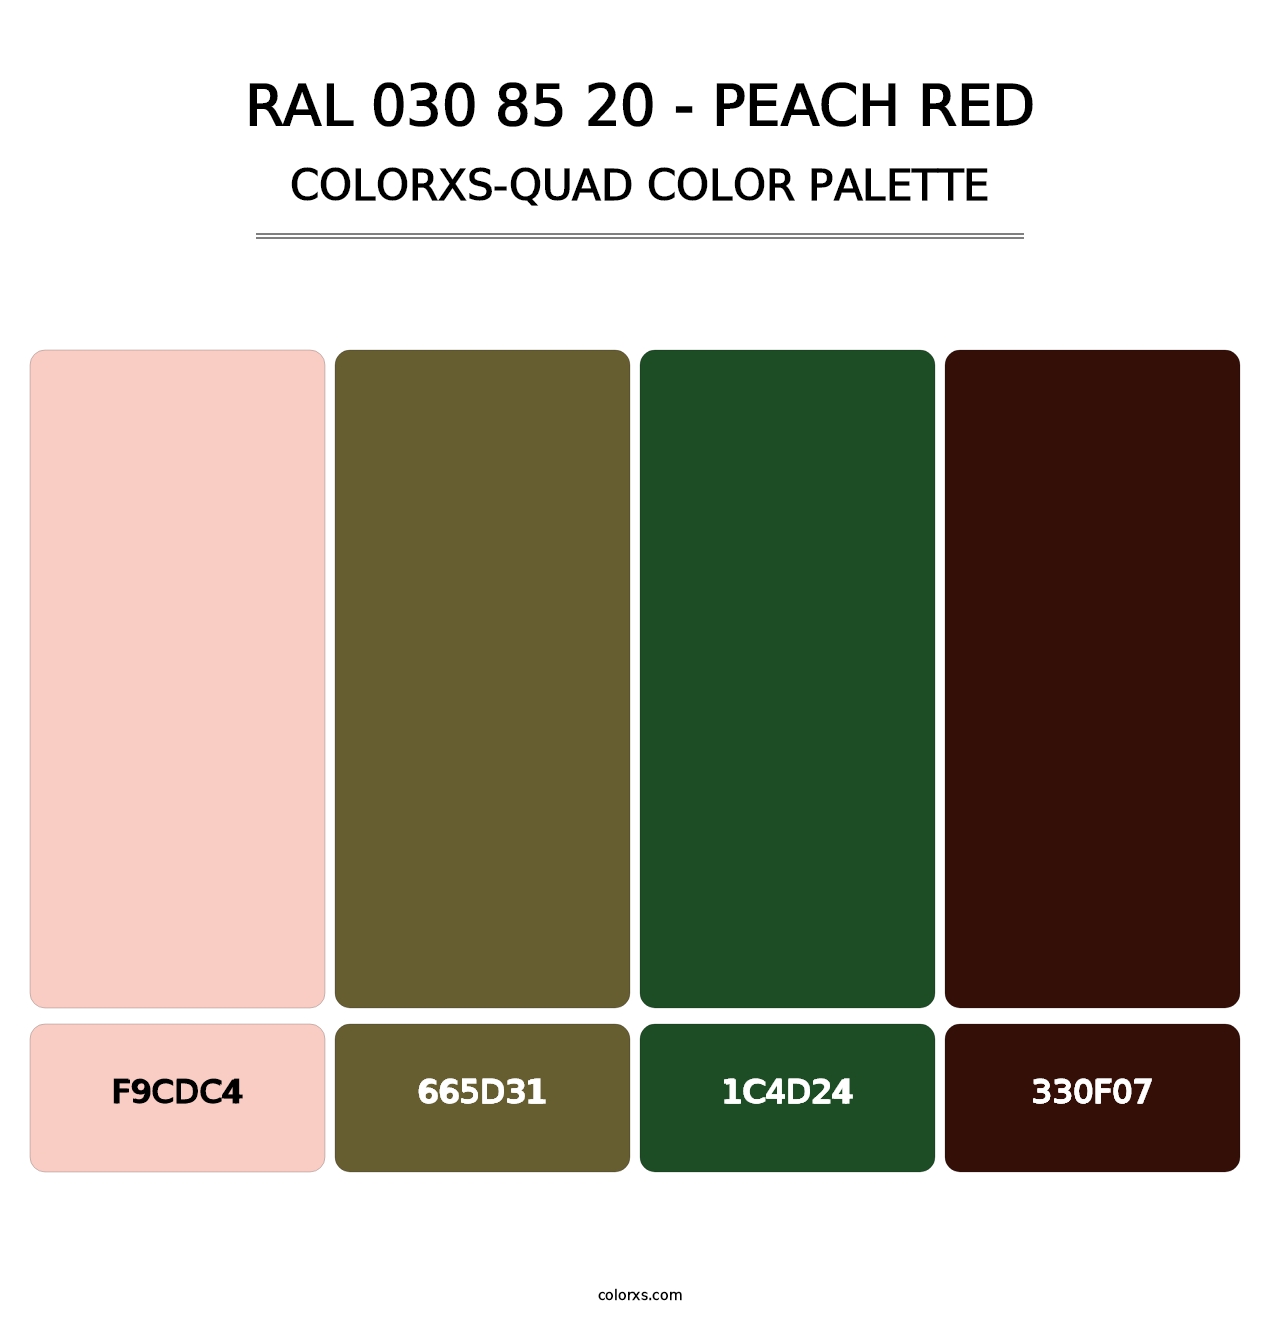 RAL 030 85 20 - Peach Red - Colorxs Quad Palette